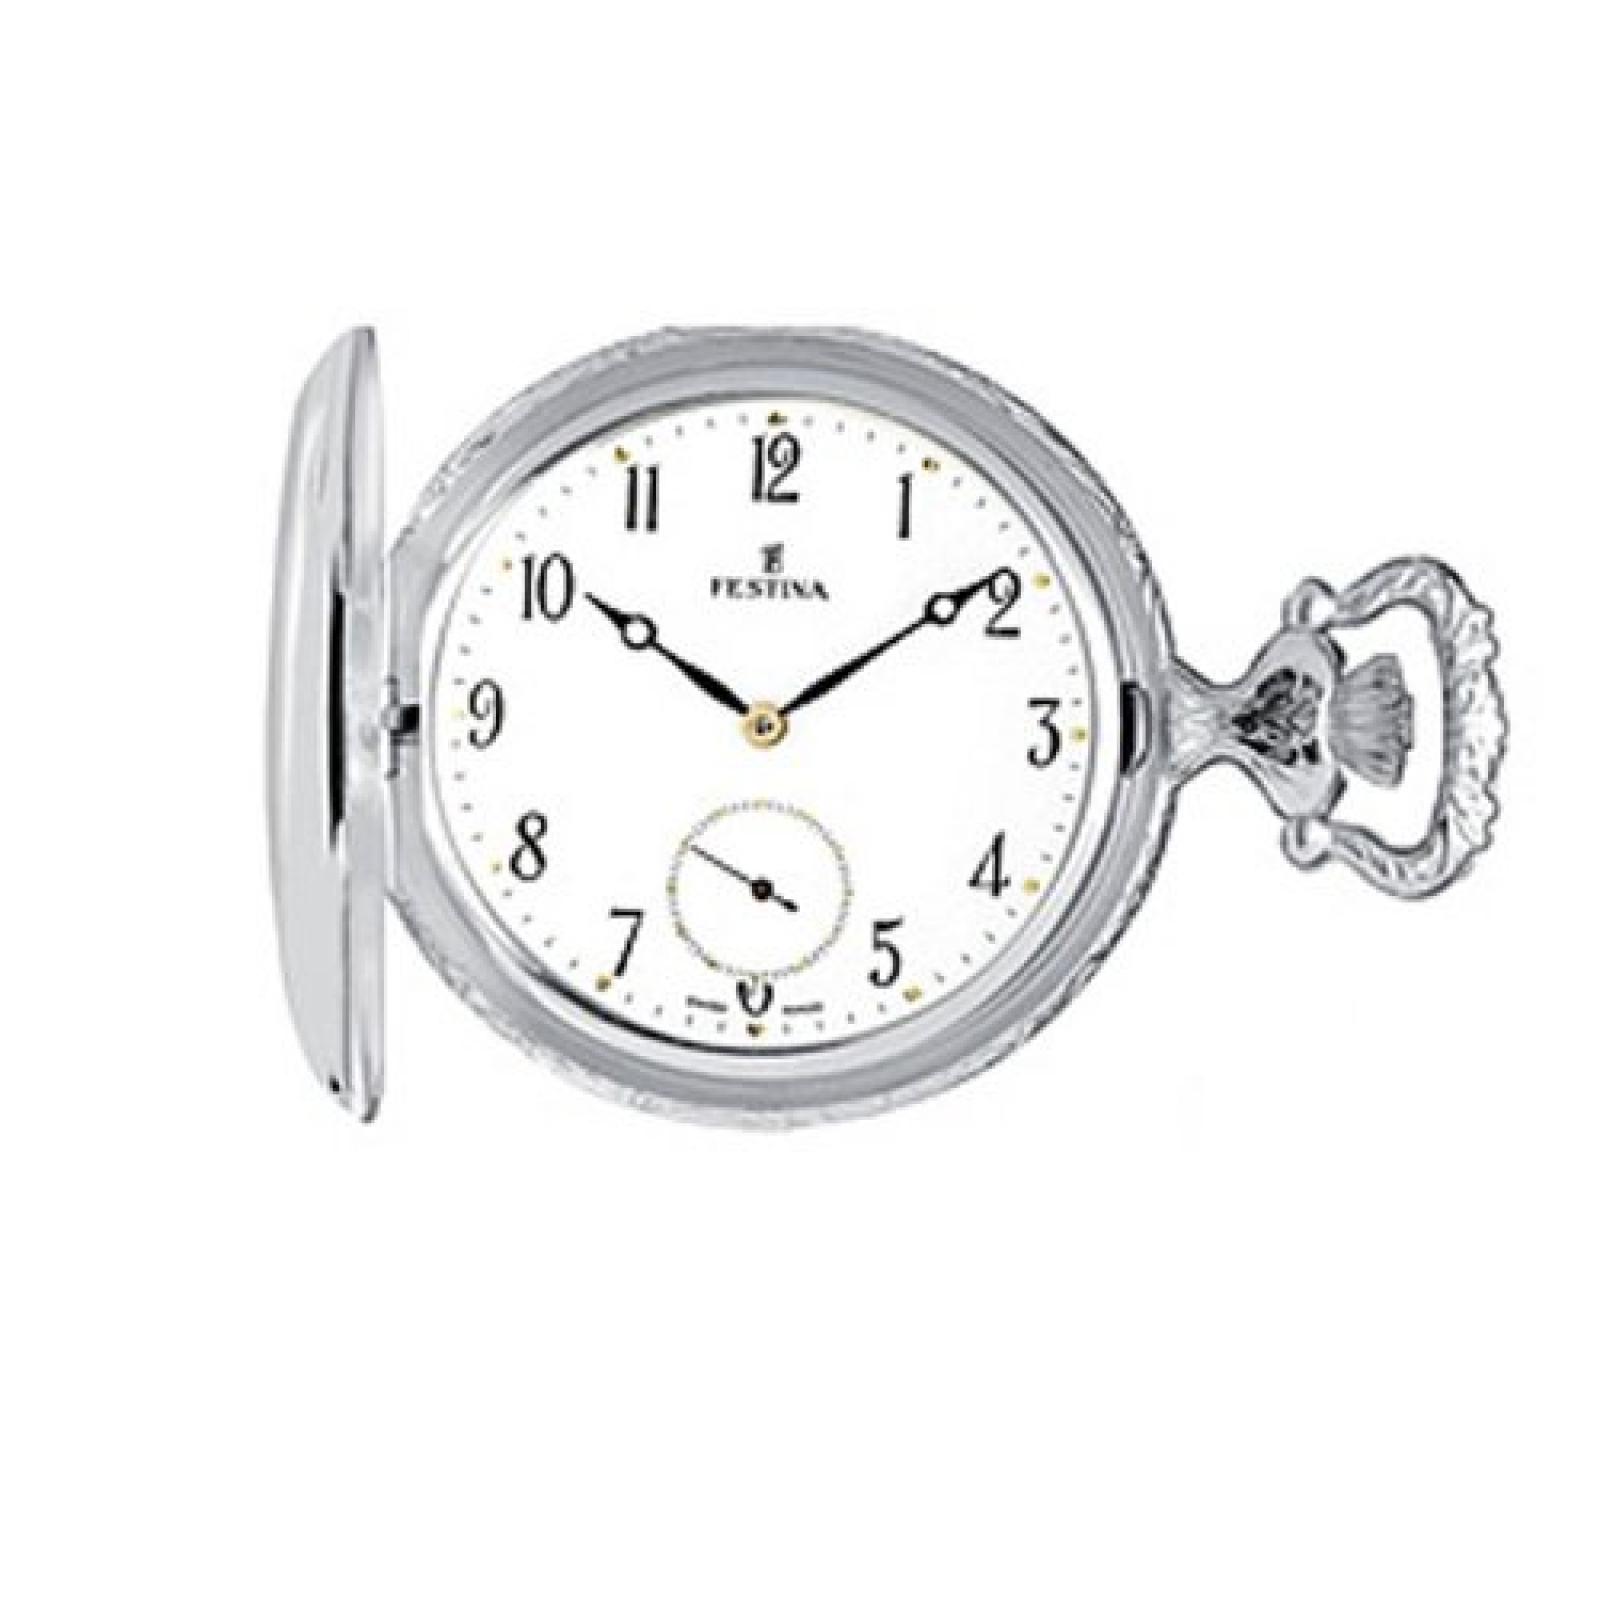 Festina Herren-Armbanduhr XL Klassik Taschenuhren Echtsilber Analog Silber F4075/1 